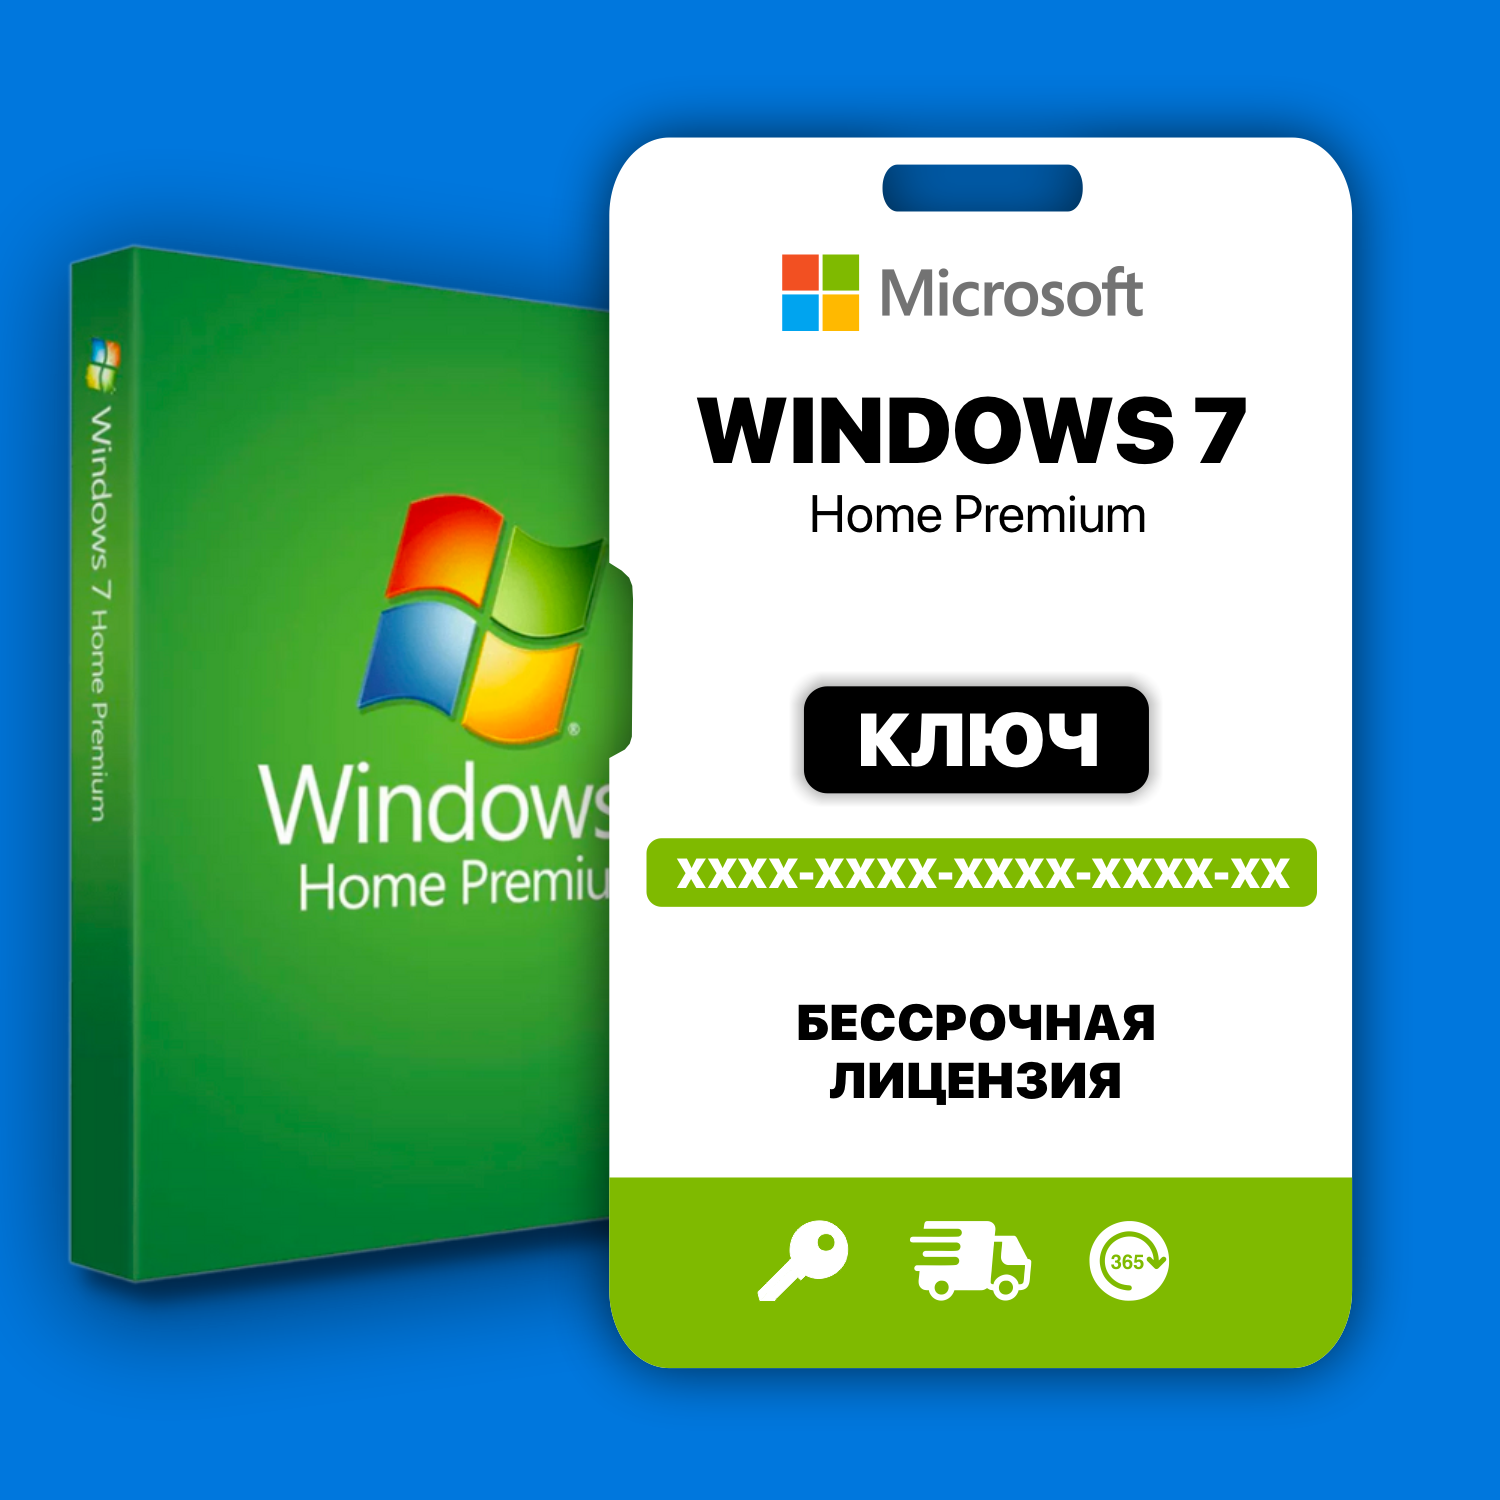 Buy Windows 7 Home Premium CD Key Compare Prices